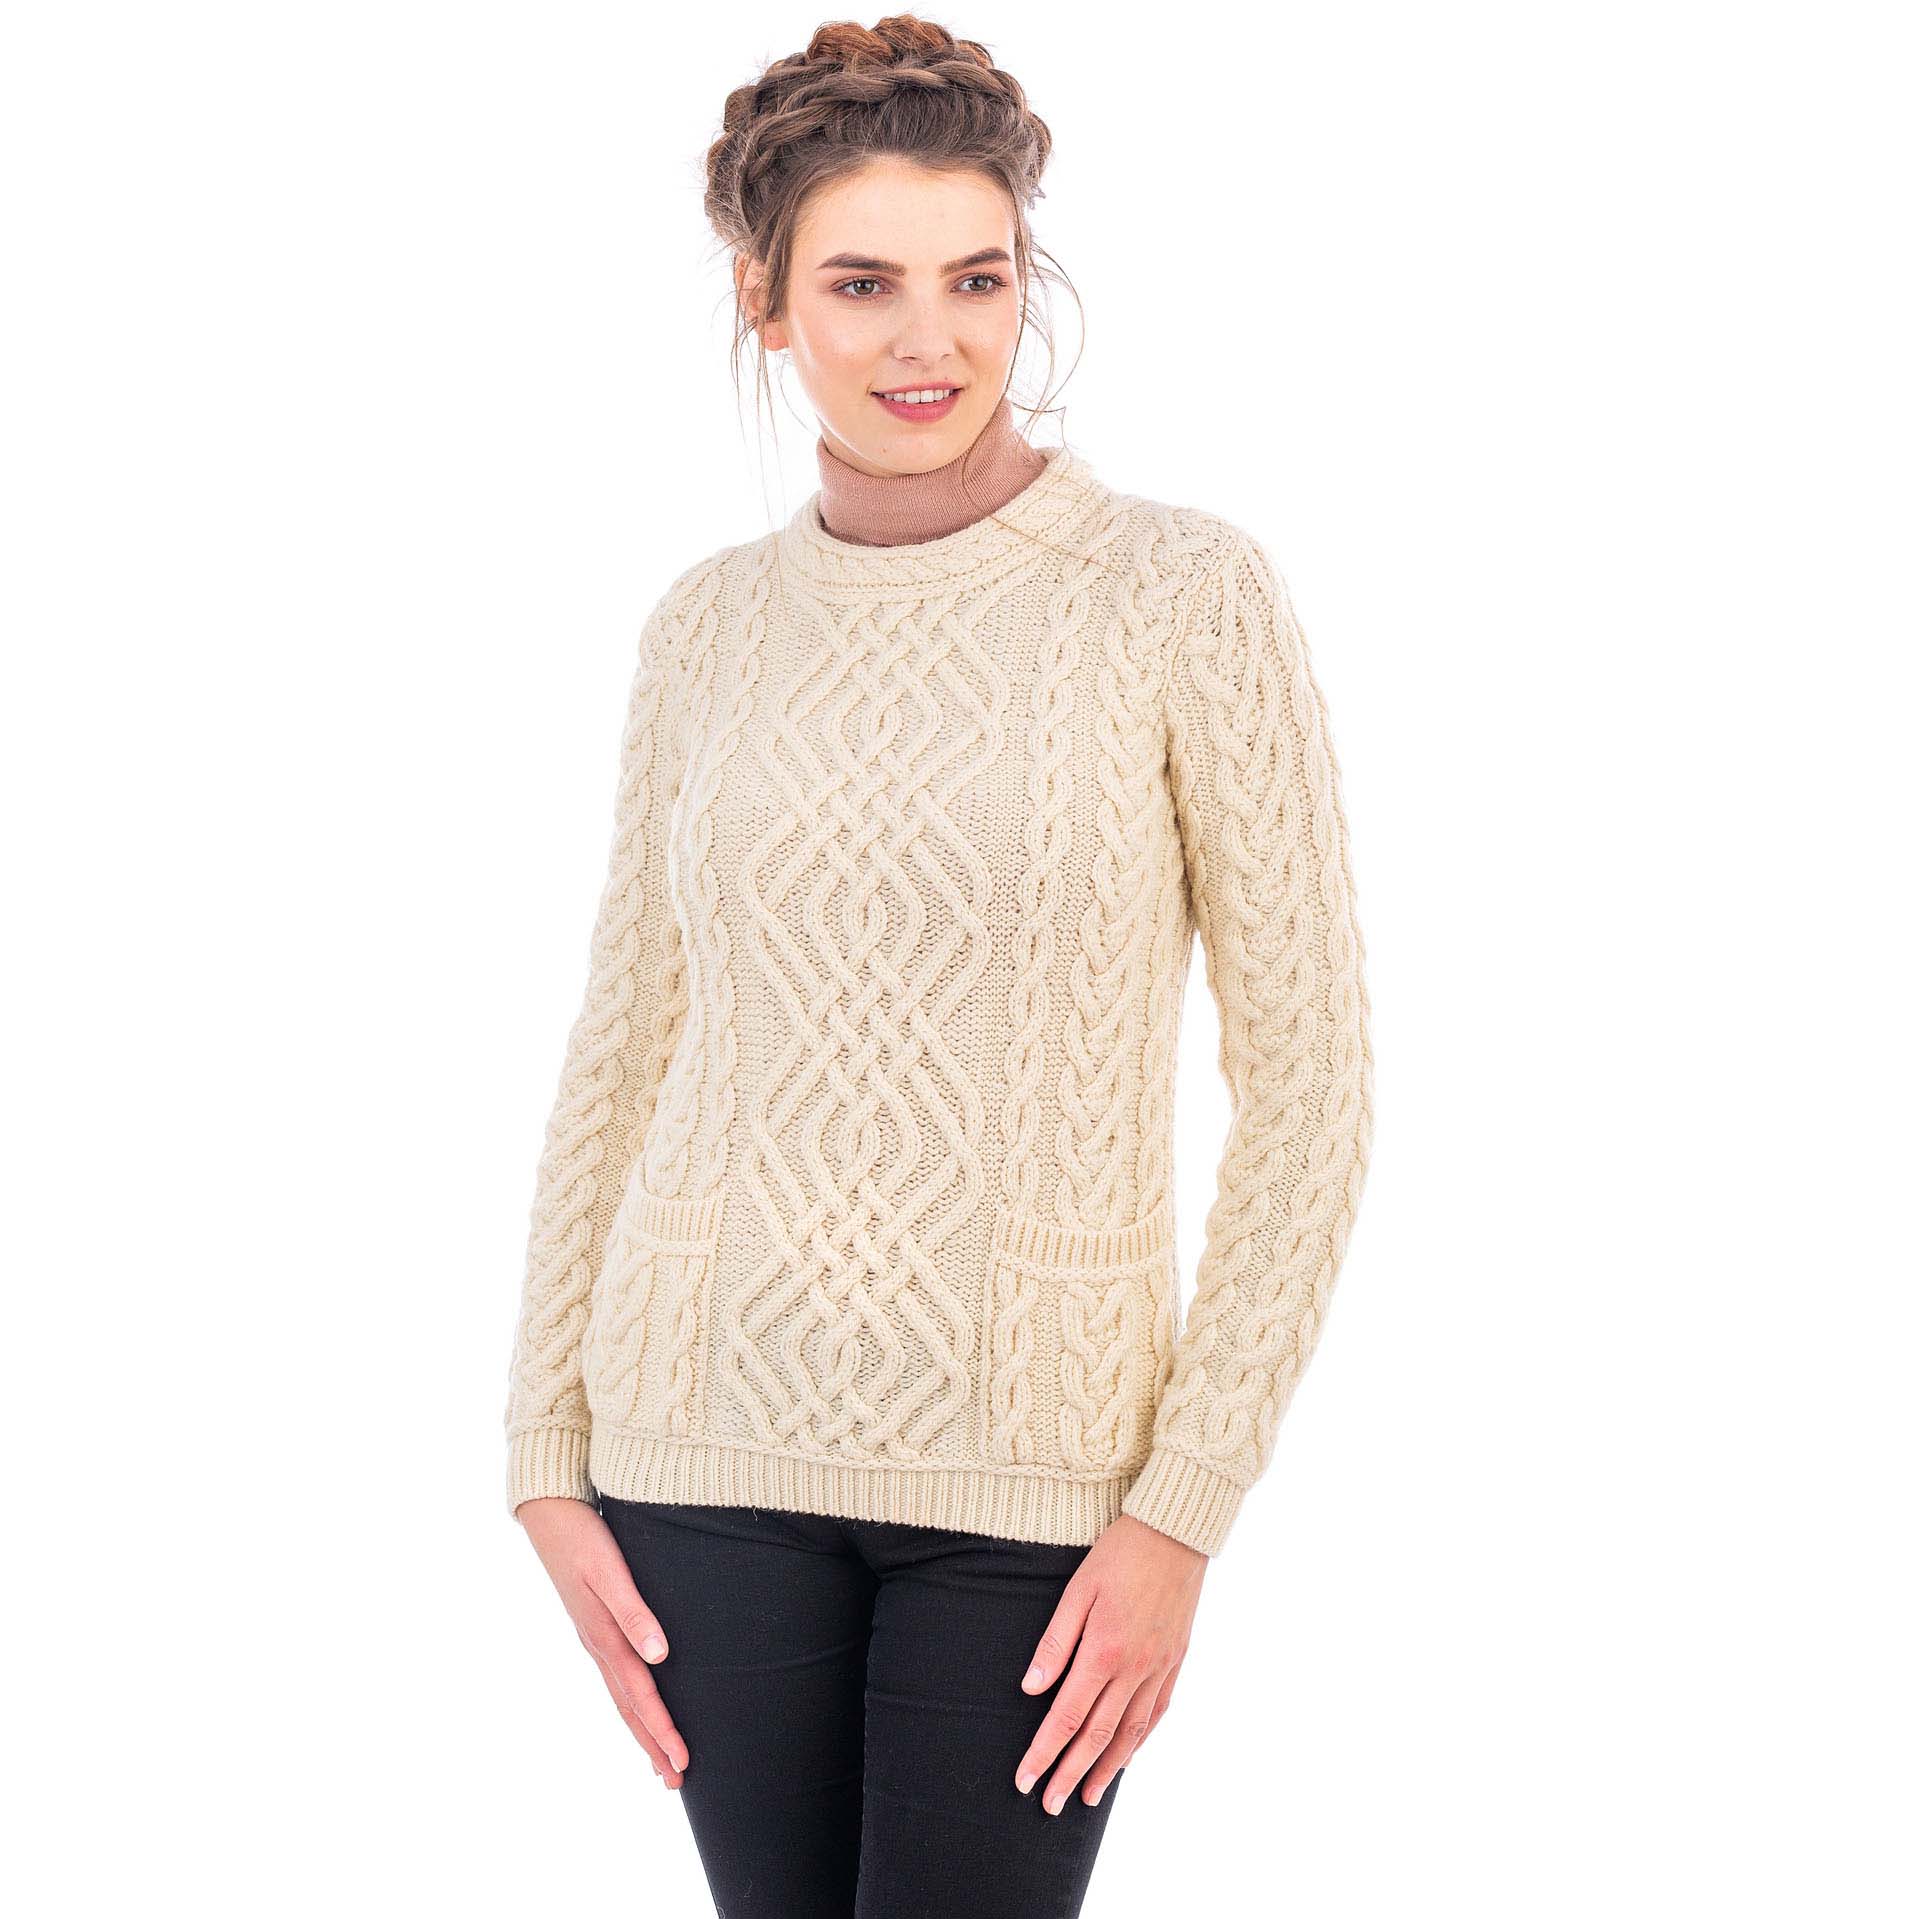 Product image for SALE | Irish Sweater | Aran Cable Knit Merino Wool Crew Ladies Sweater